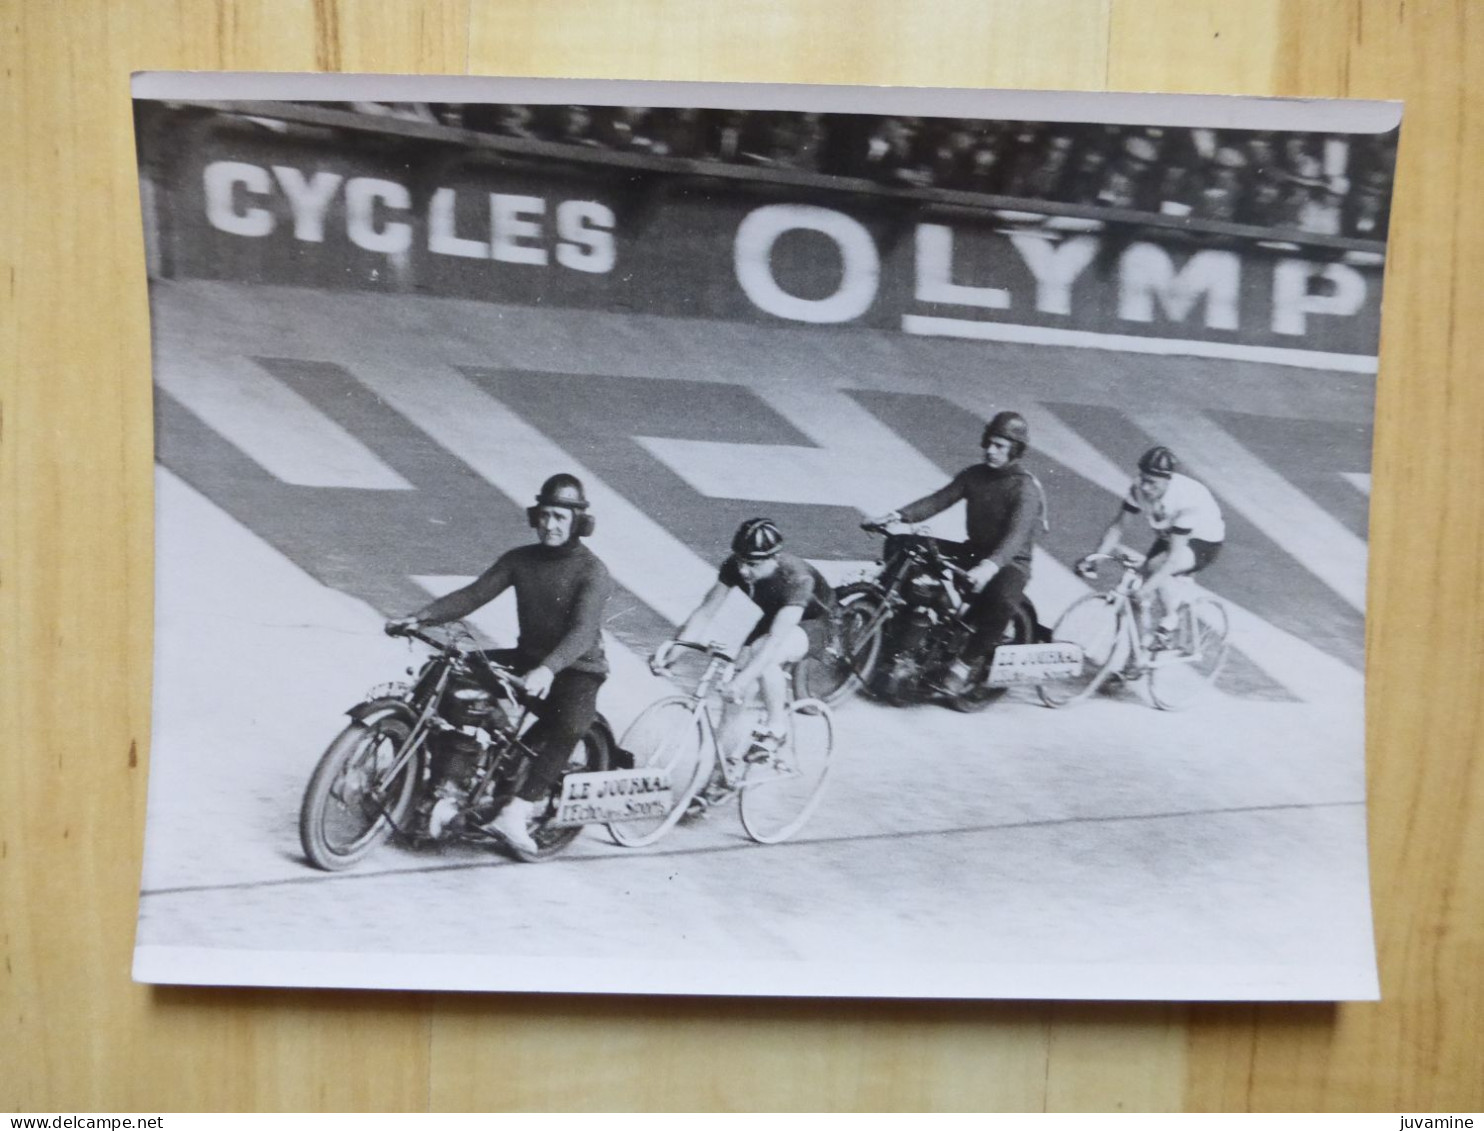 STADE BUFFALO 1934  - SELECTION CRITERIUM DES AS - L'ALLEMAND EHMER DOUBLE FAUDET - PHOTOGRAPHIE CYCLISME CYCLISTE SPORT - Radsport